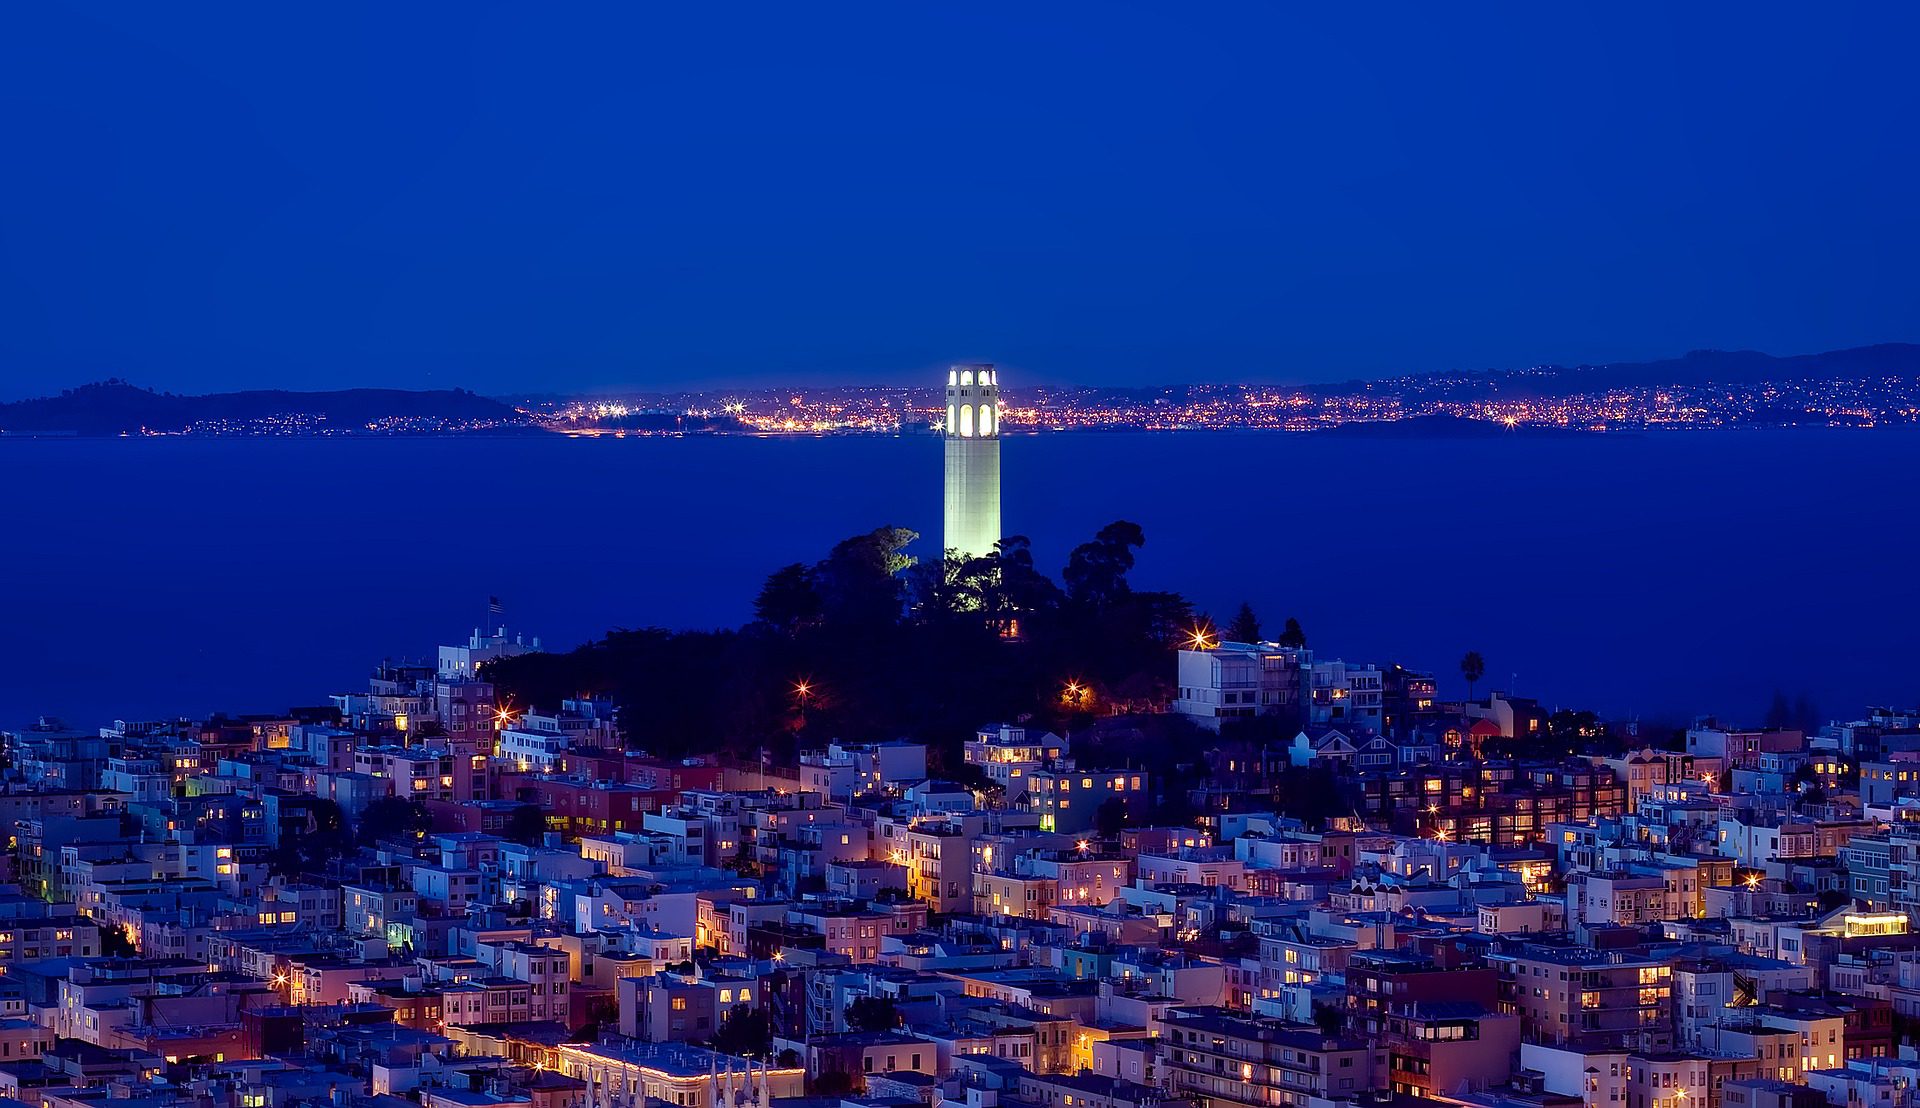 Coit Tower, San Francisco, CA